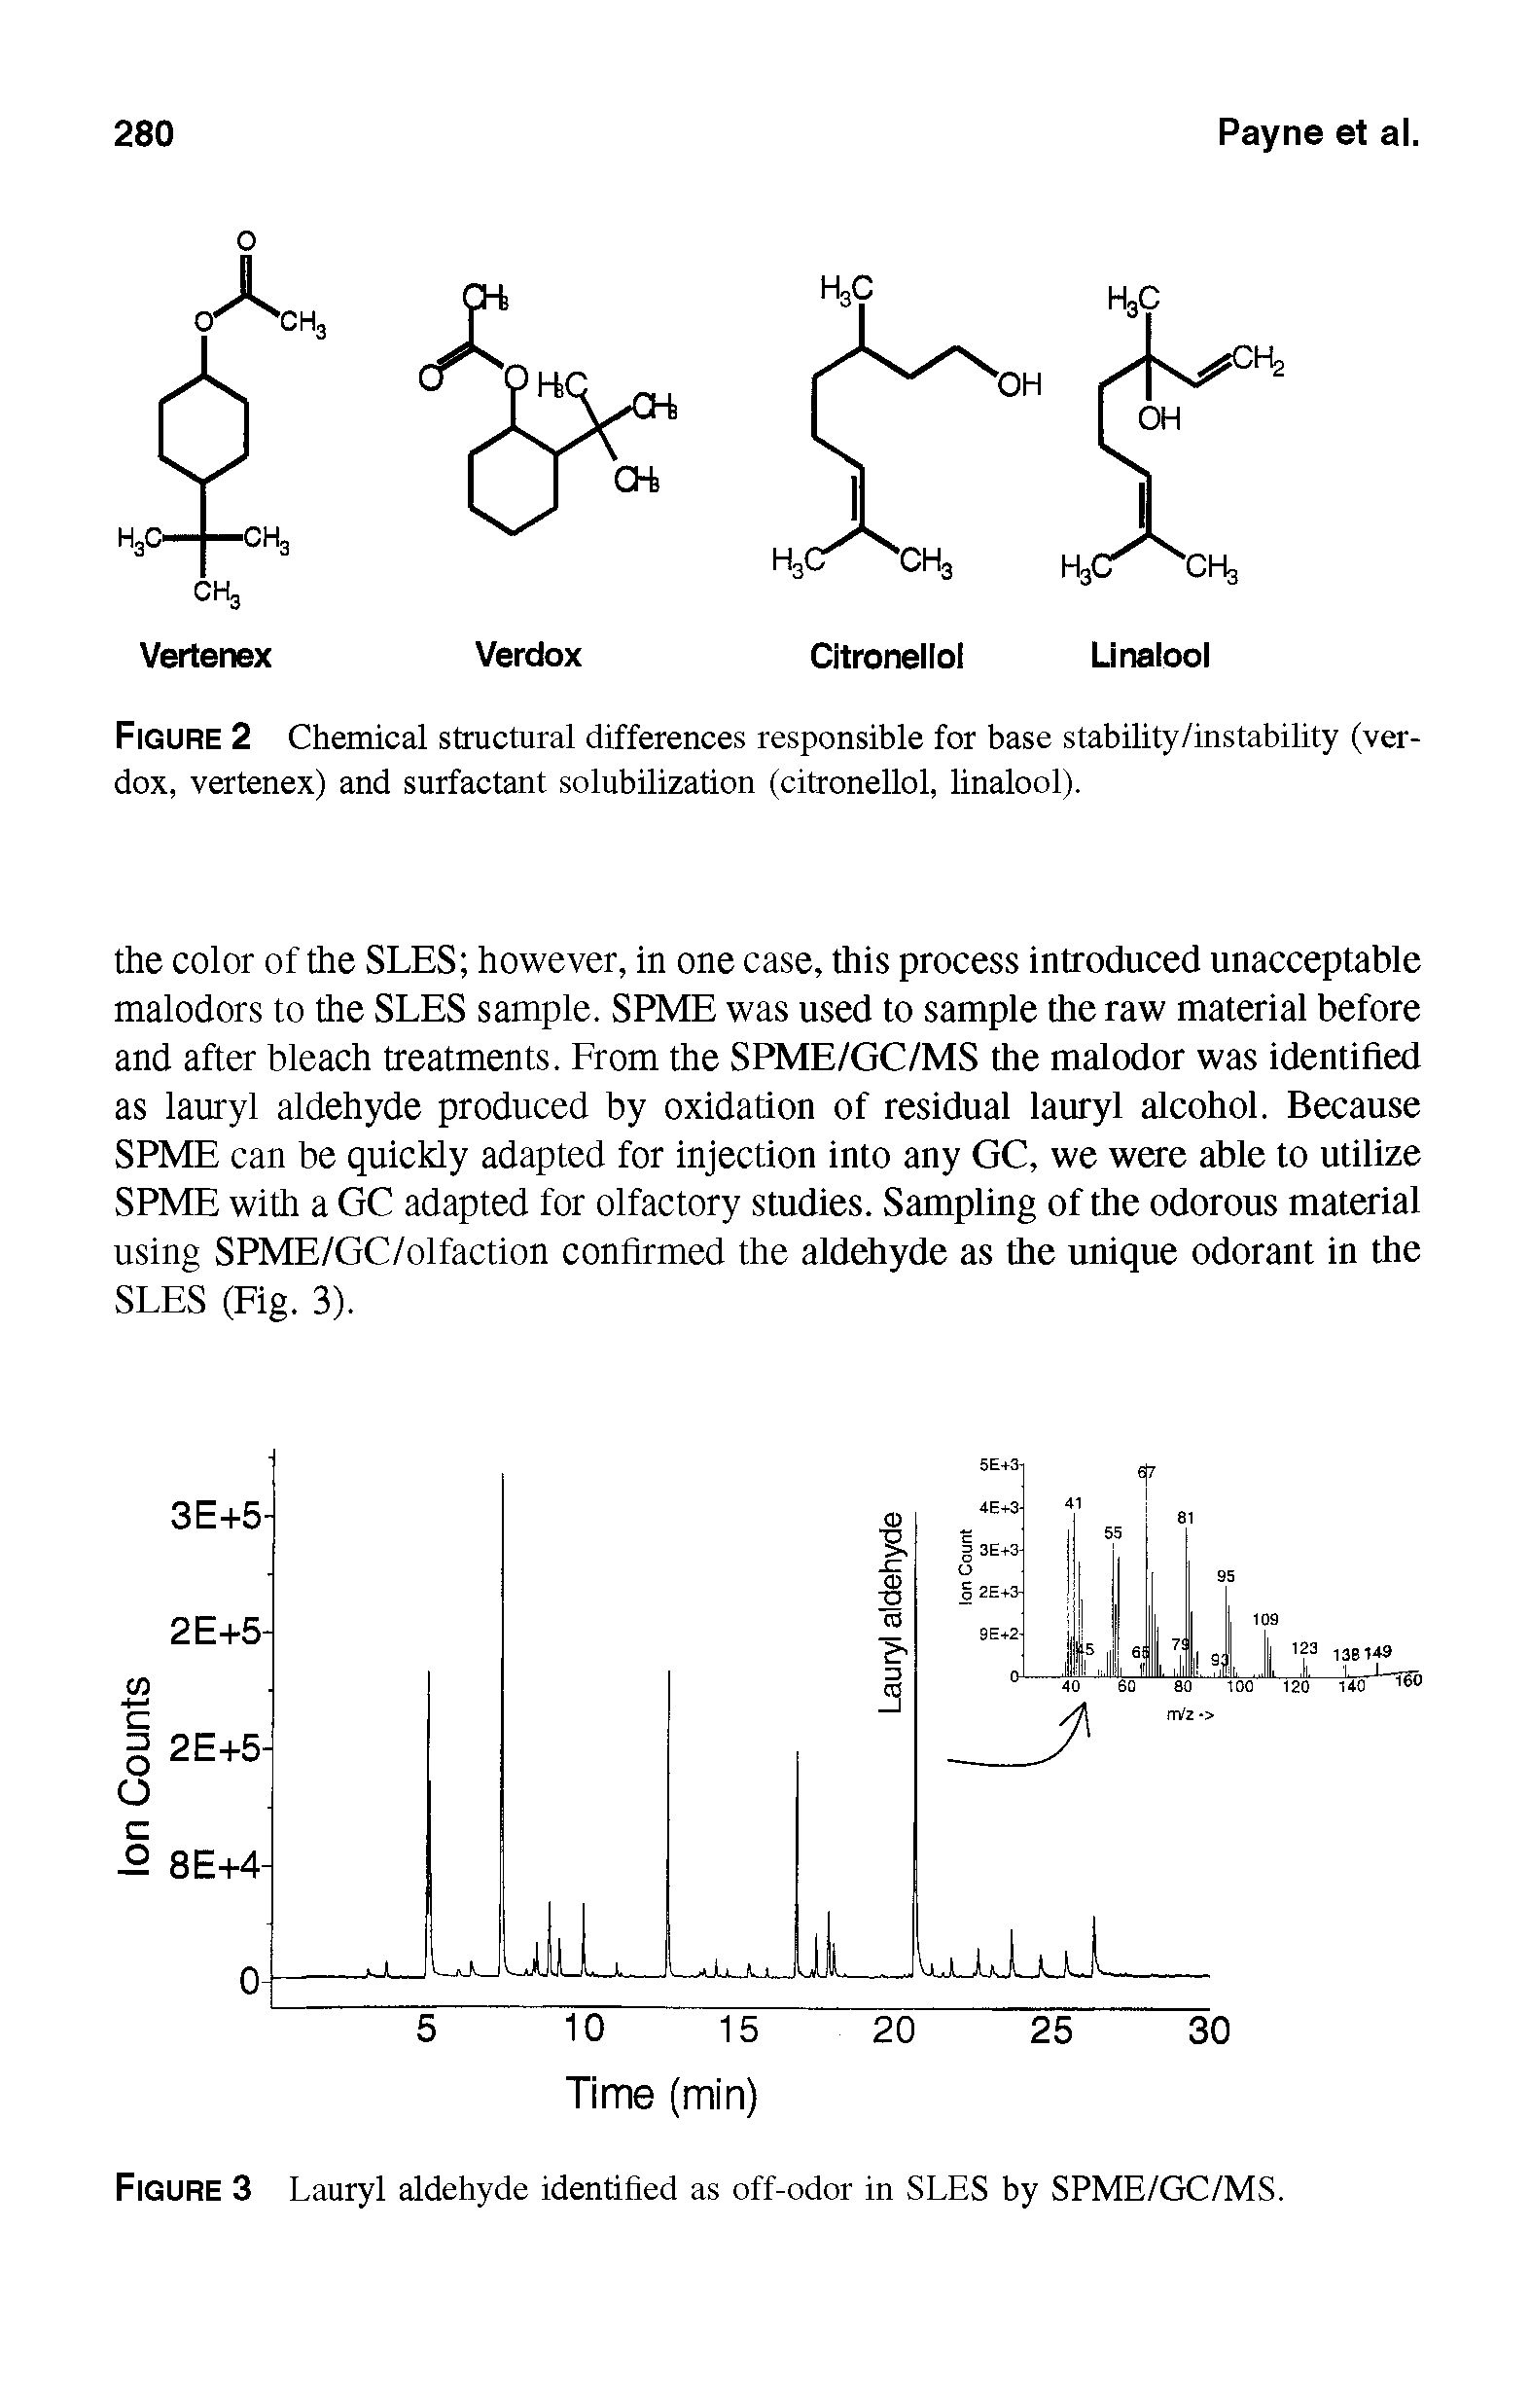 Figure 3 Lauryl aldehyde identified as off-odor in SLES by SPME/GC/MS.